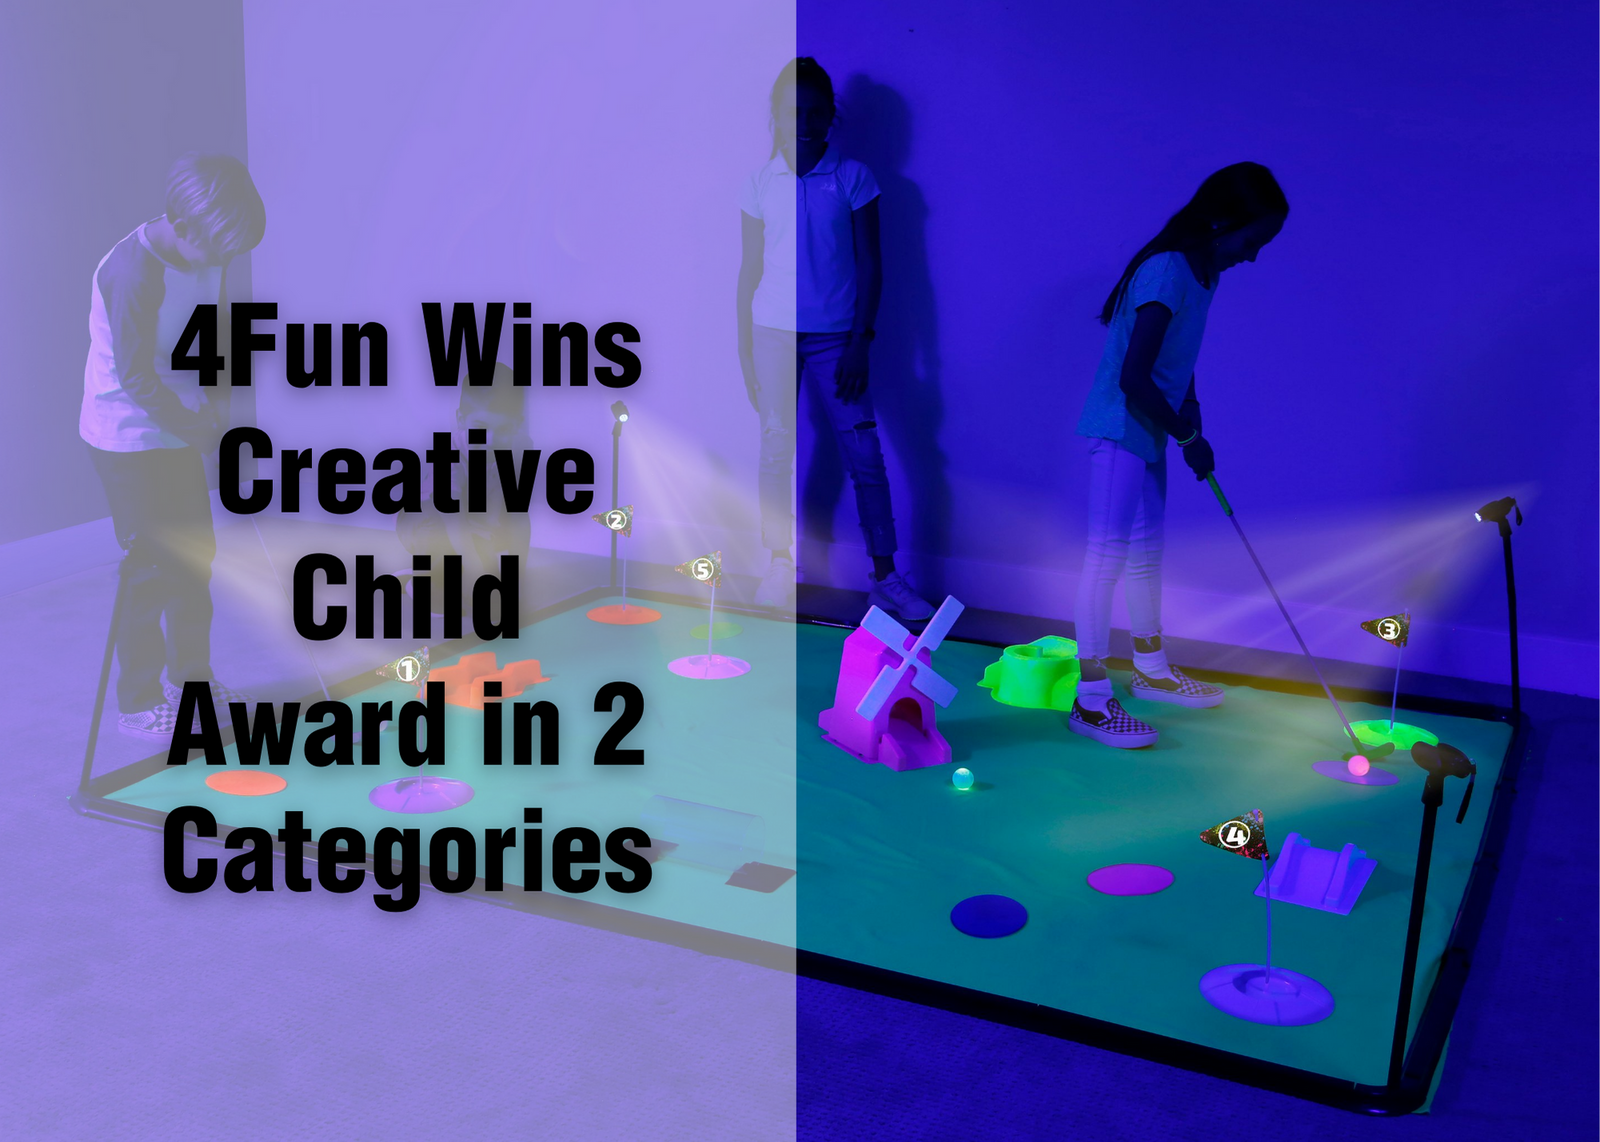 4Fun Wins Creative Child Award in 2 Categories